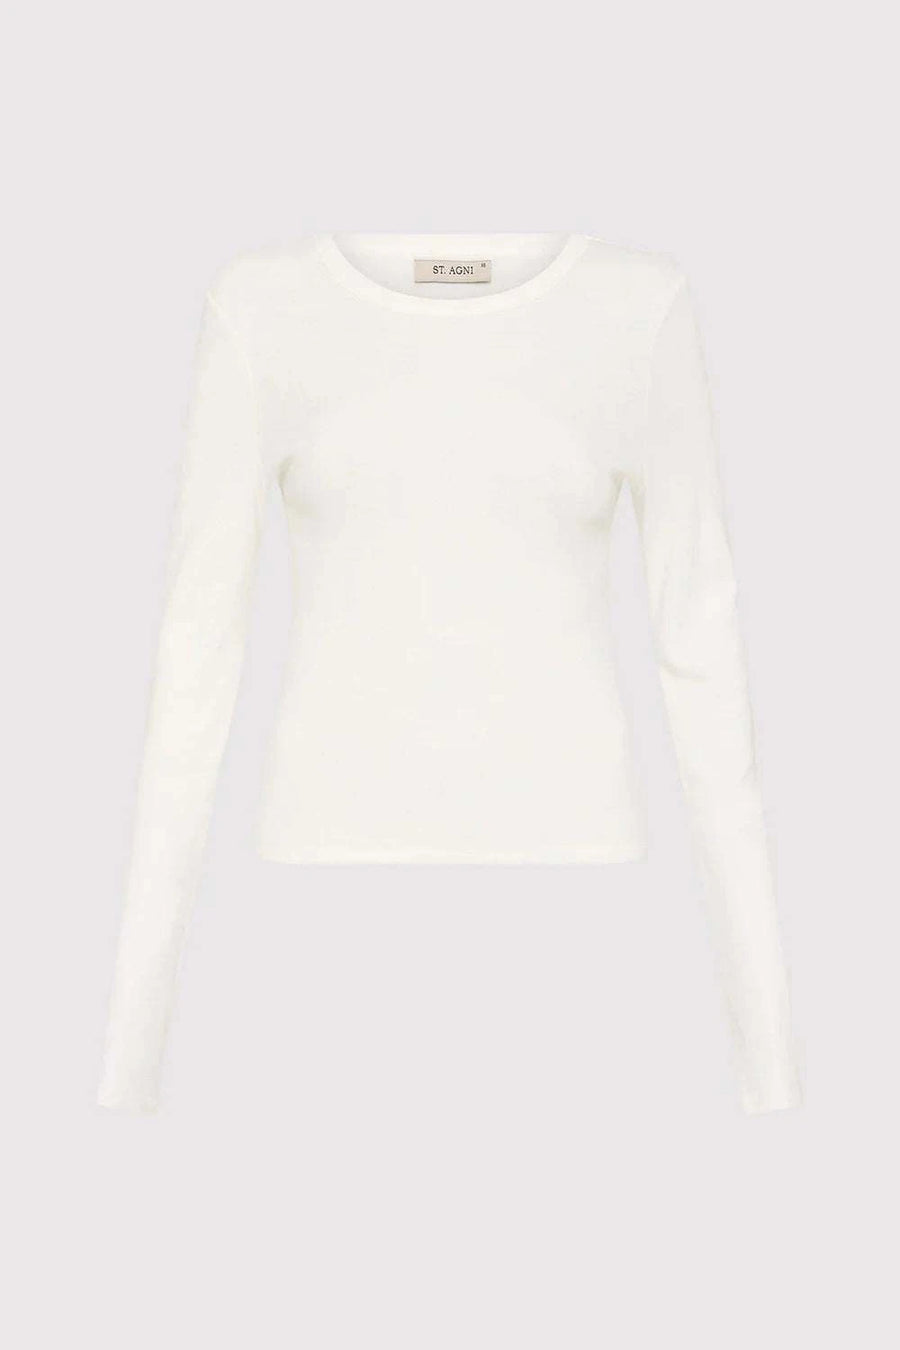 Agni Organic Cotton Long Sleeve Top White